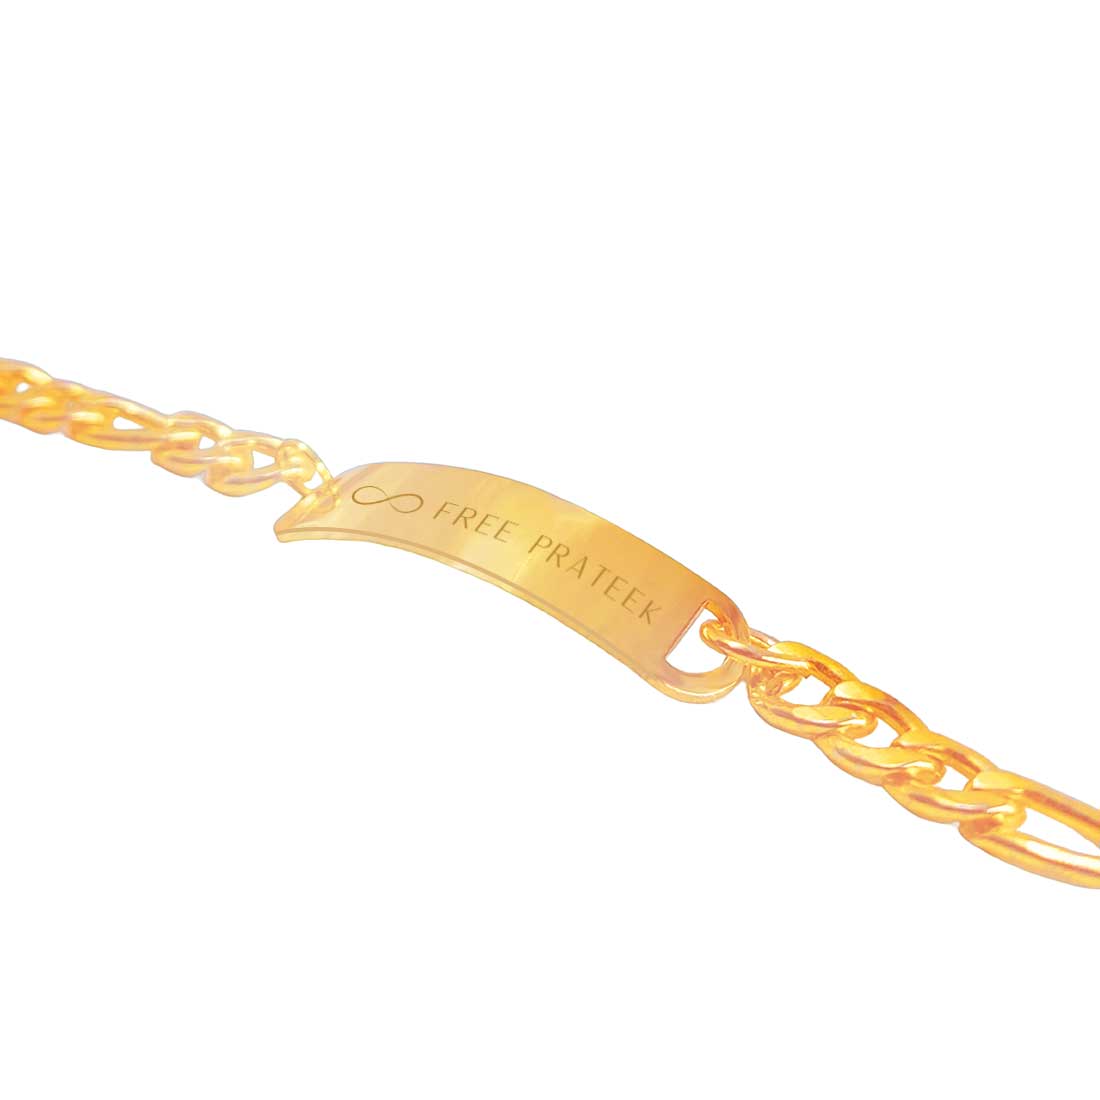 Buy Name Bracelet, Gold Name Bracelet, Dainty Gold Name Bracelet,  Personalized Jewelry, Christmas Gift, Custom Bracelet for Man and Women  Online in India - Etsy